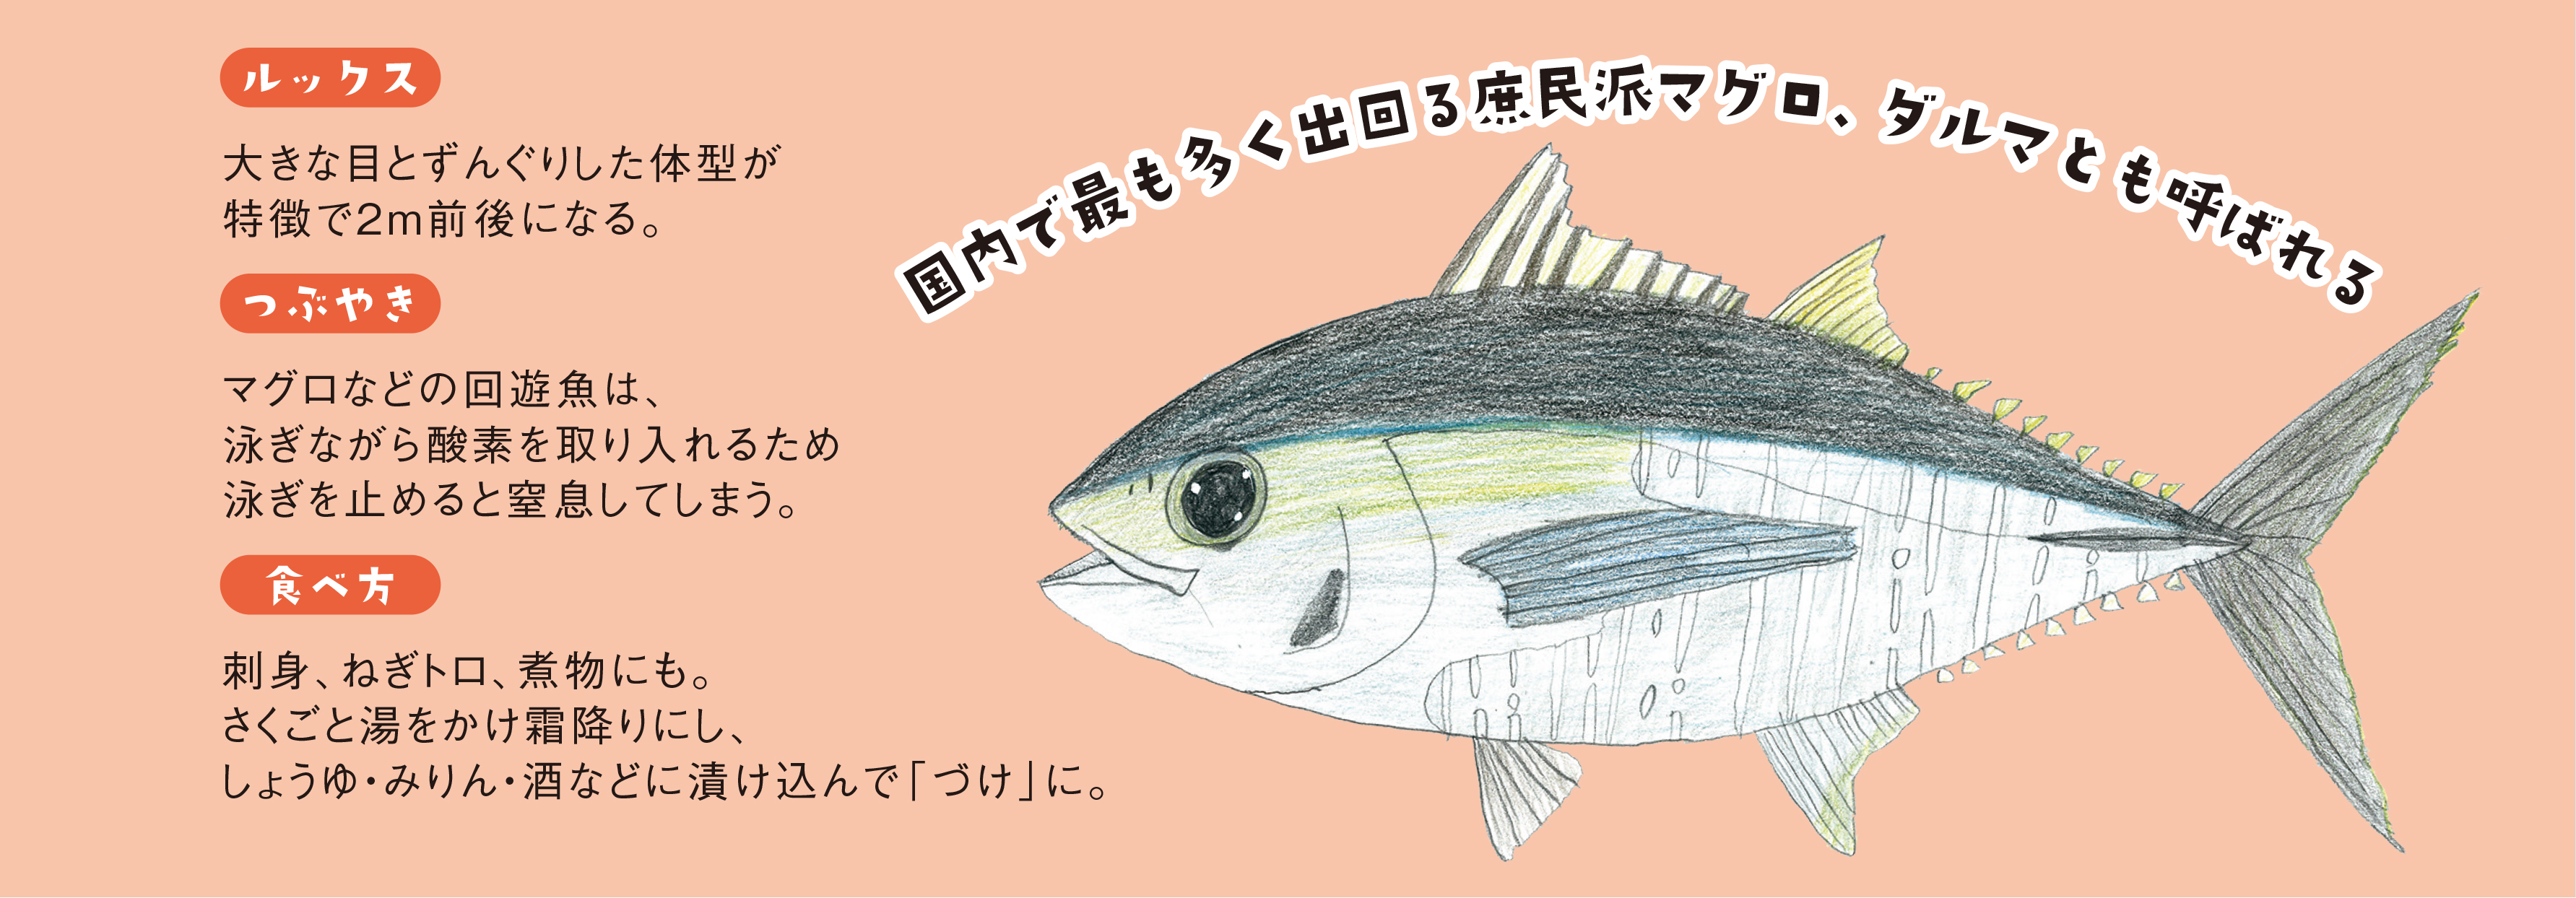 Osakana Cate お家で簡単 魚レシピ 旬の魚介料理をお手軽に 魚食普及推進センター 一般社団法人 大日本水産会